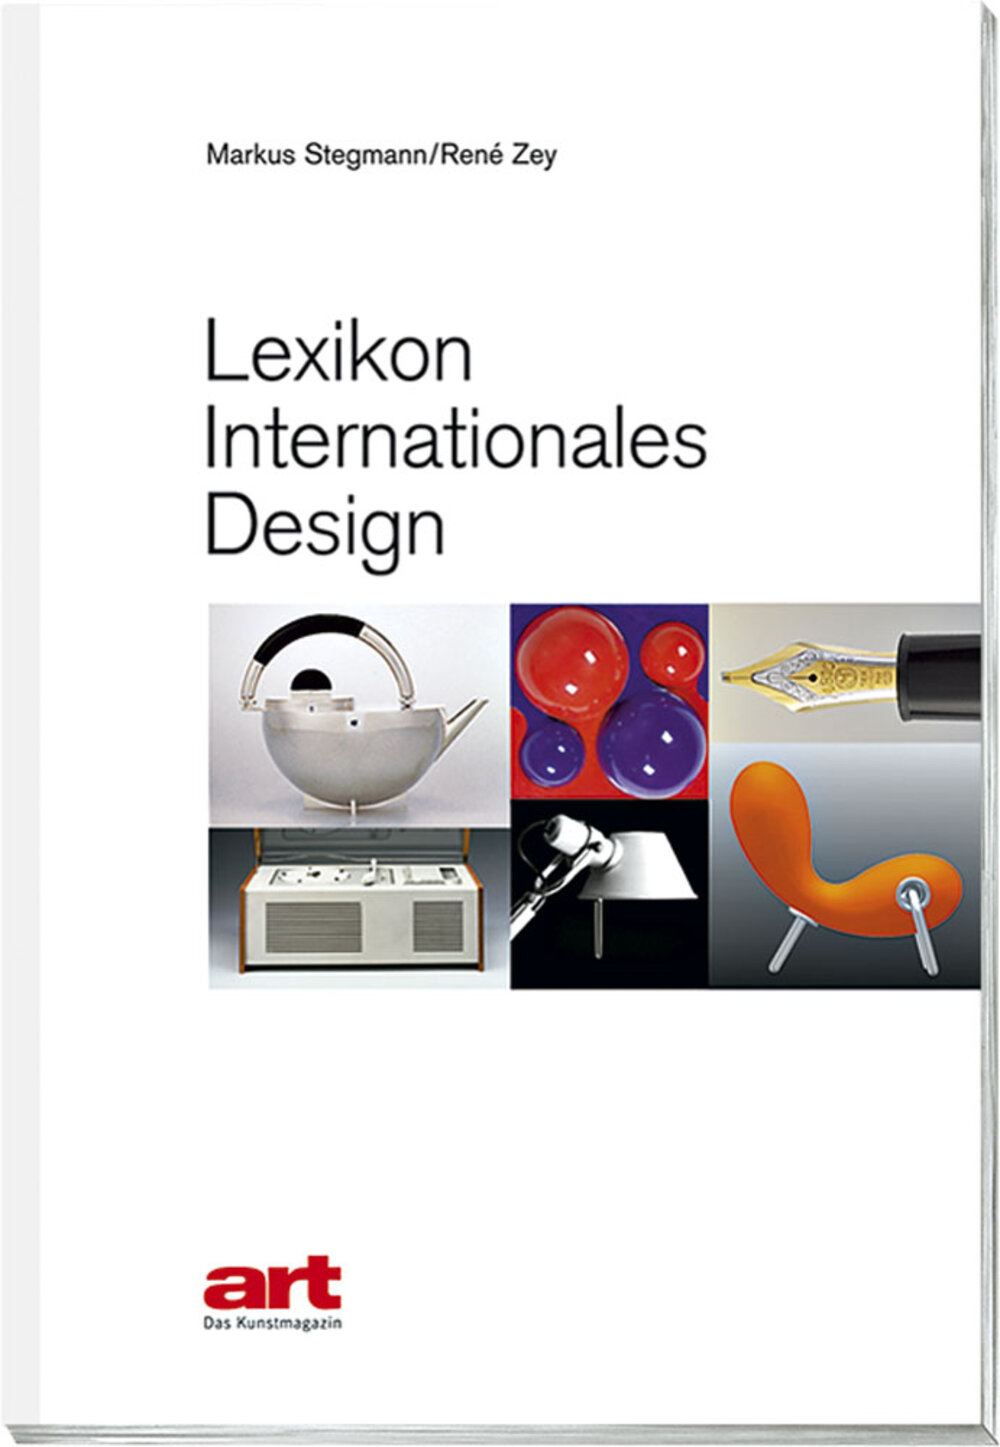 art „Lexikon Internationales Design“